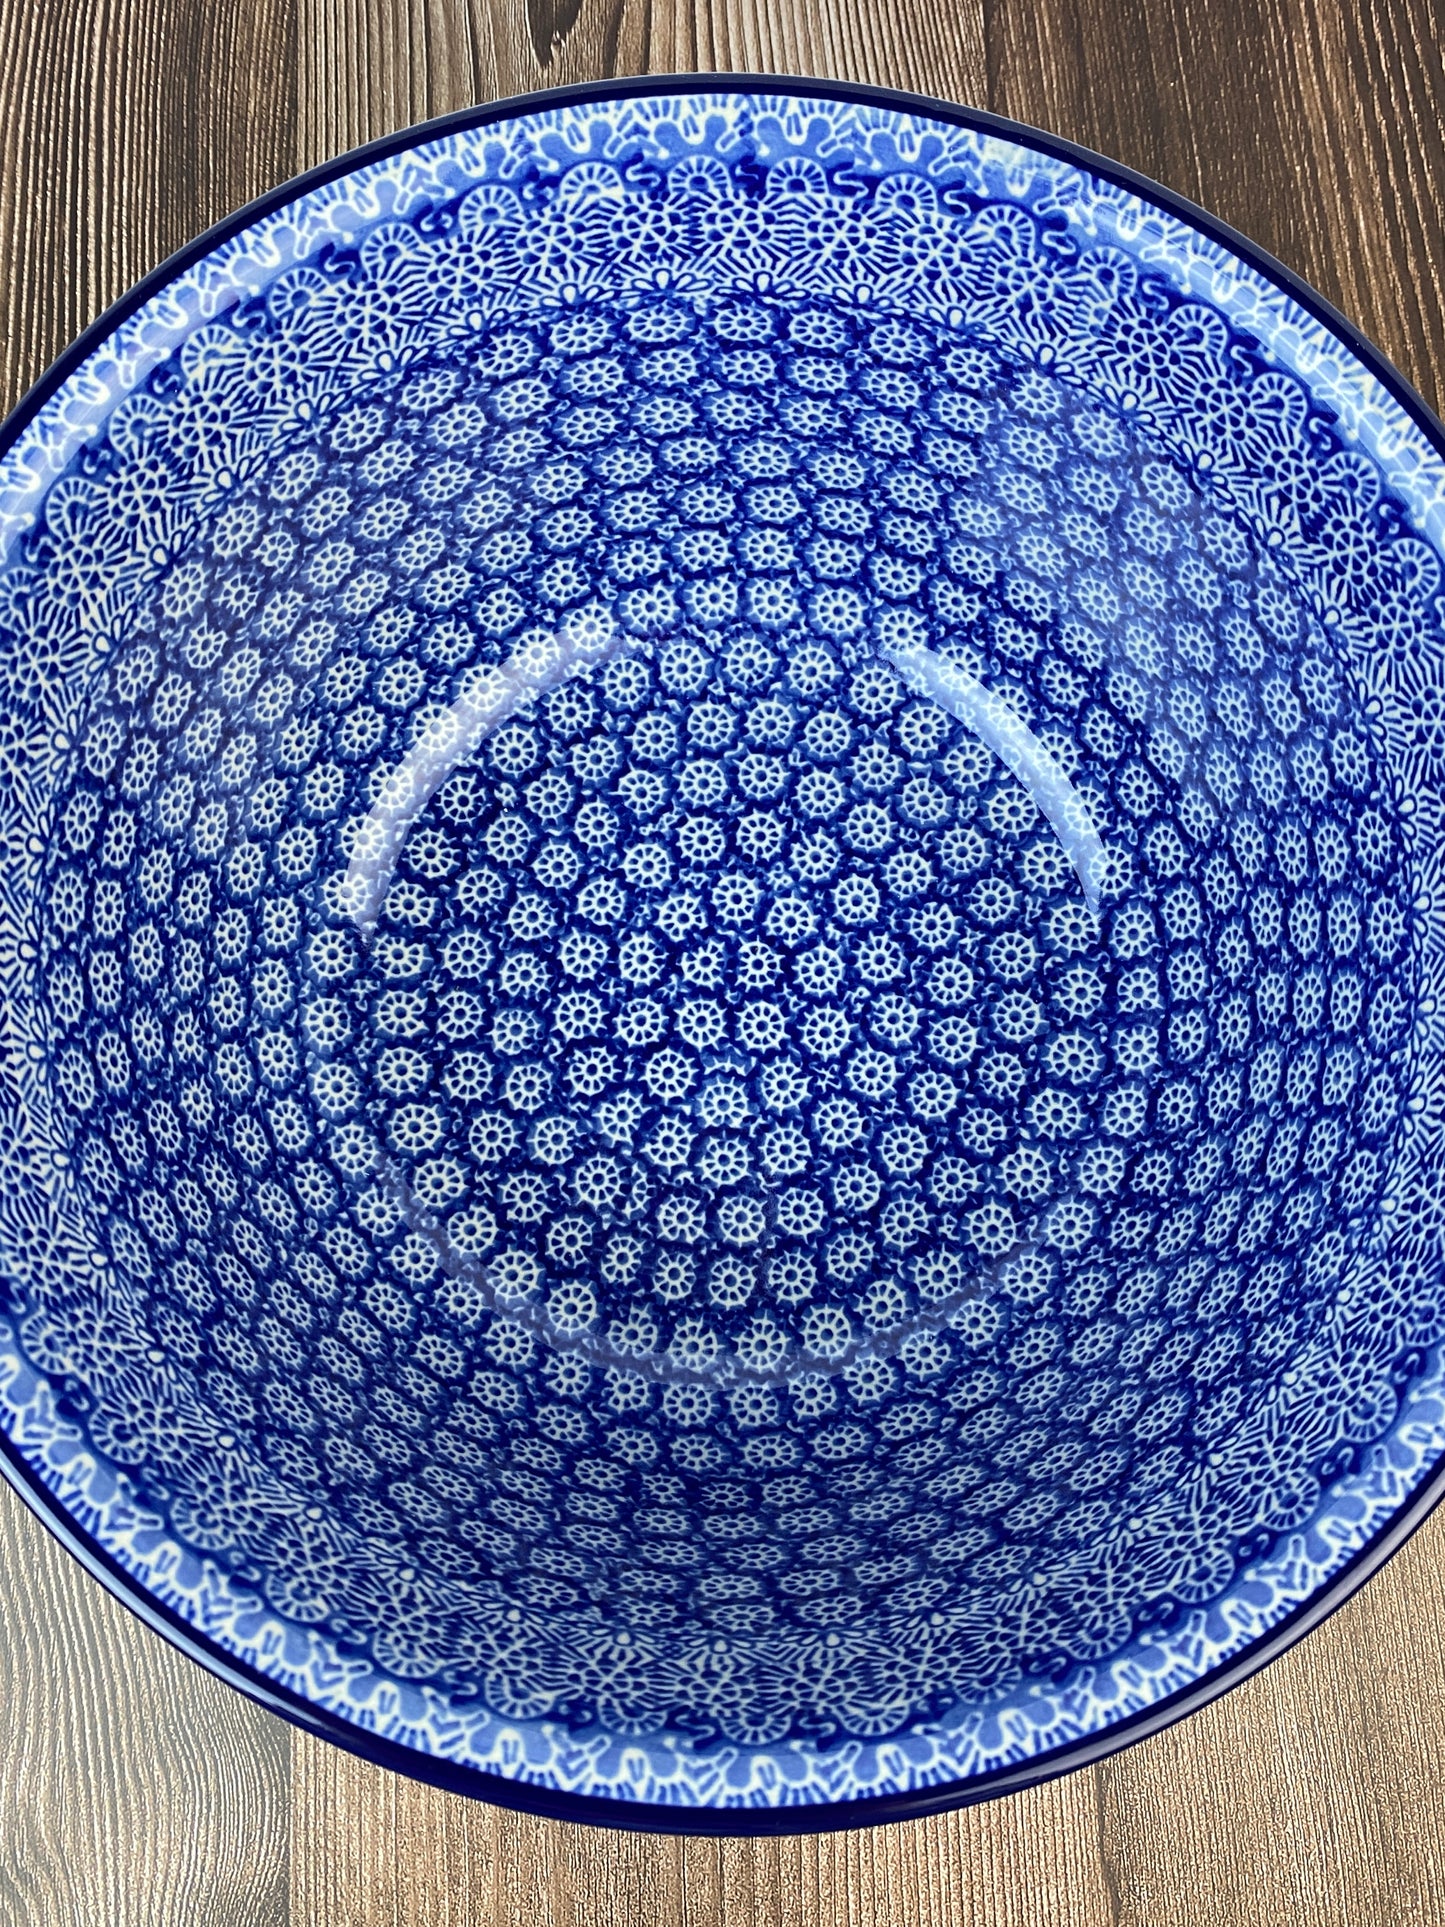 SALE Large Mixing Bowl - Shape 113 - Pattern 884